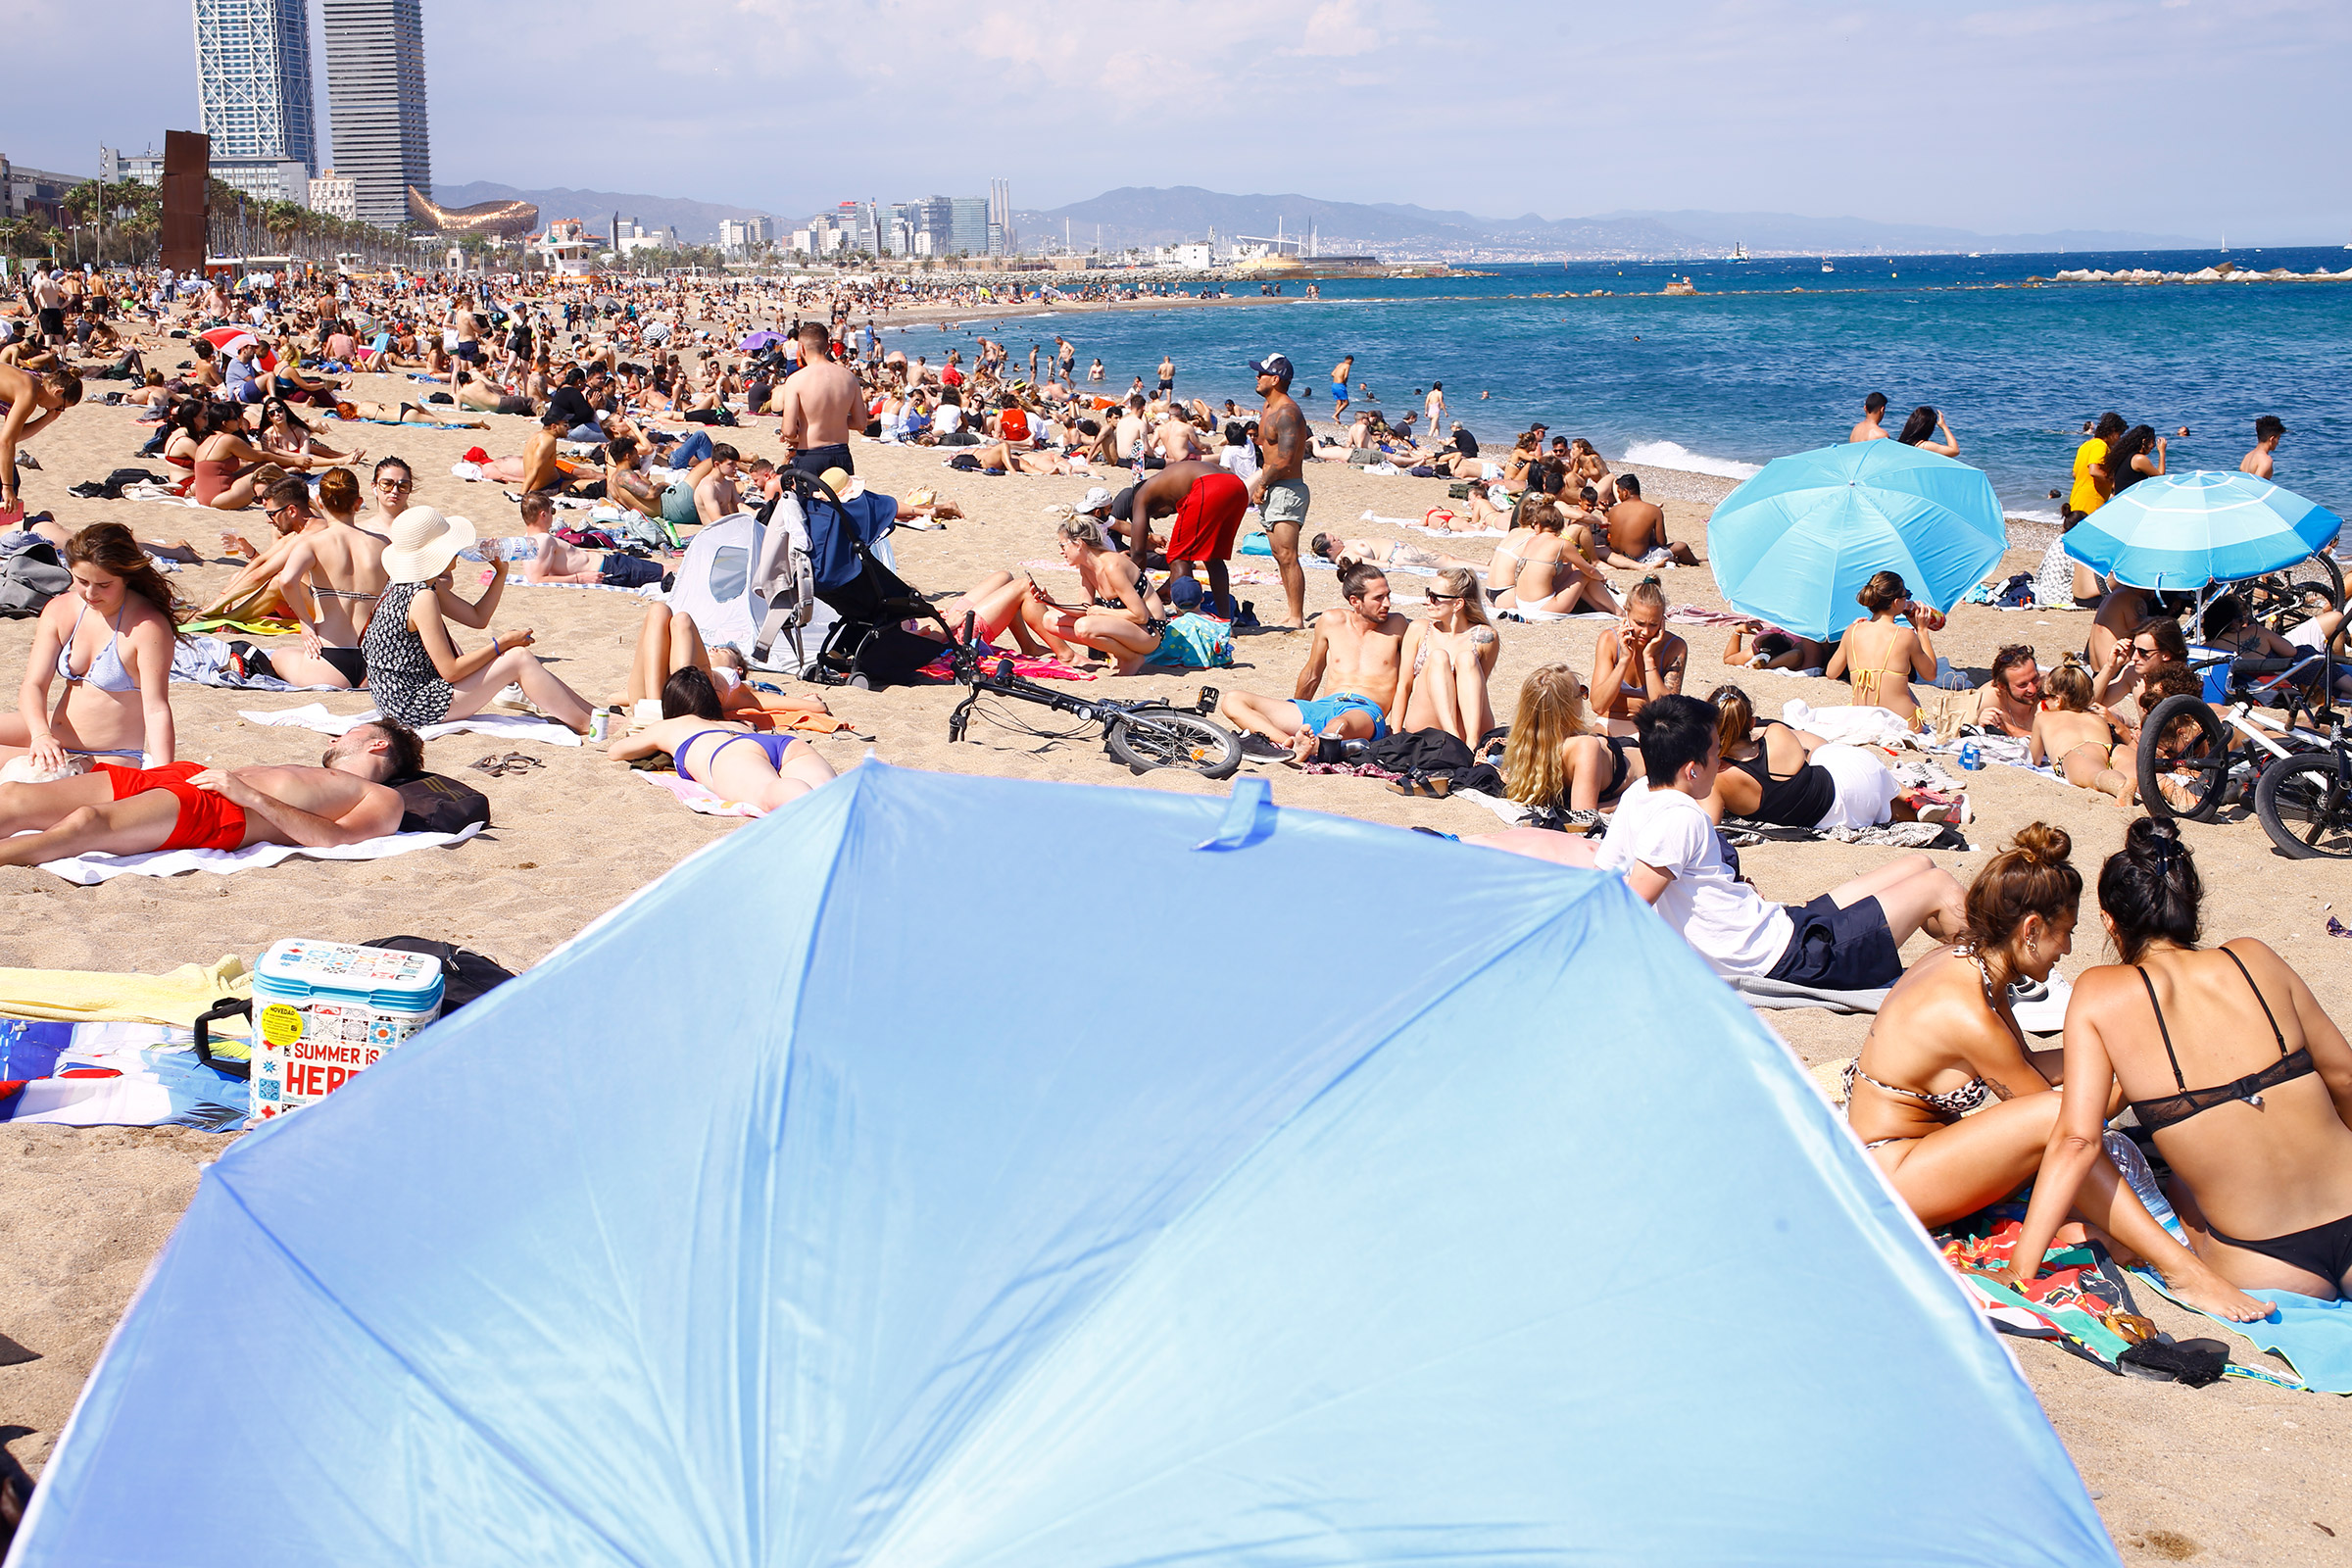 Sunbathers enjoy the busy Barceloneta Beach on June 6, 2021. (Ricardo Cases for TIME)